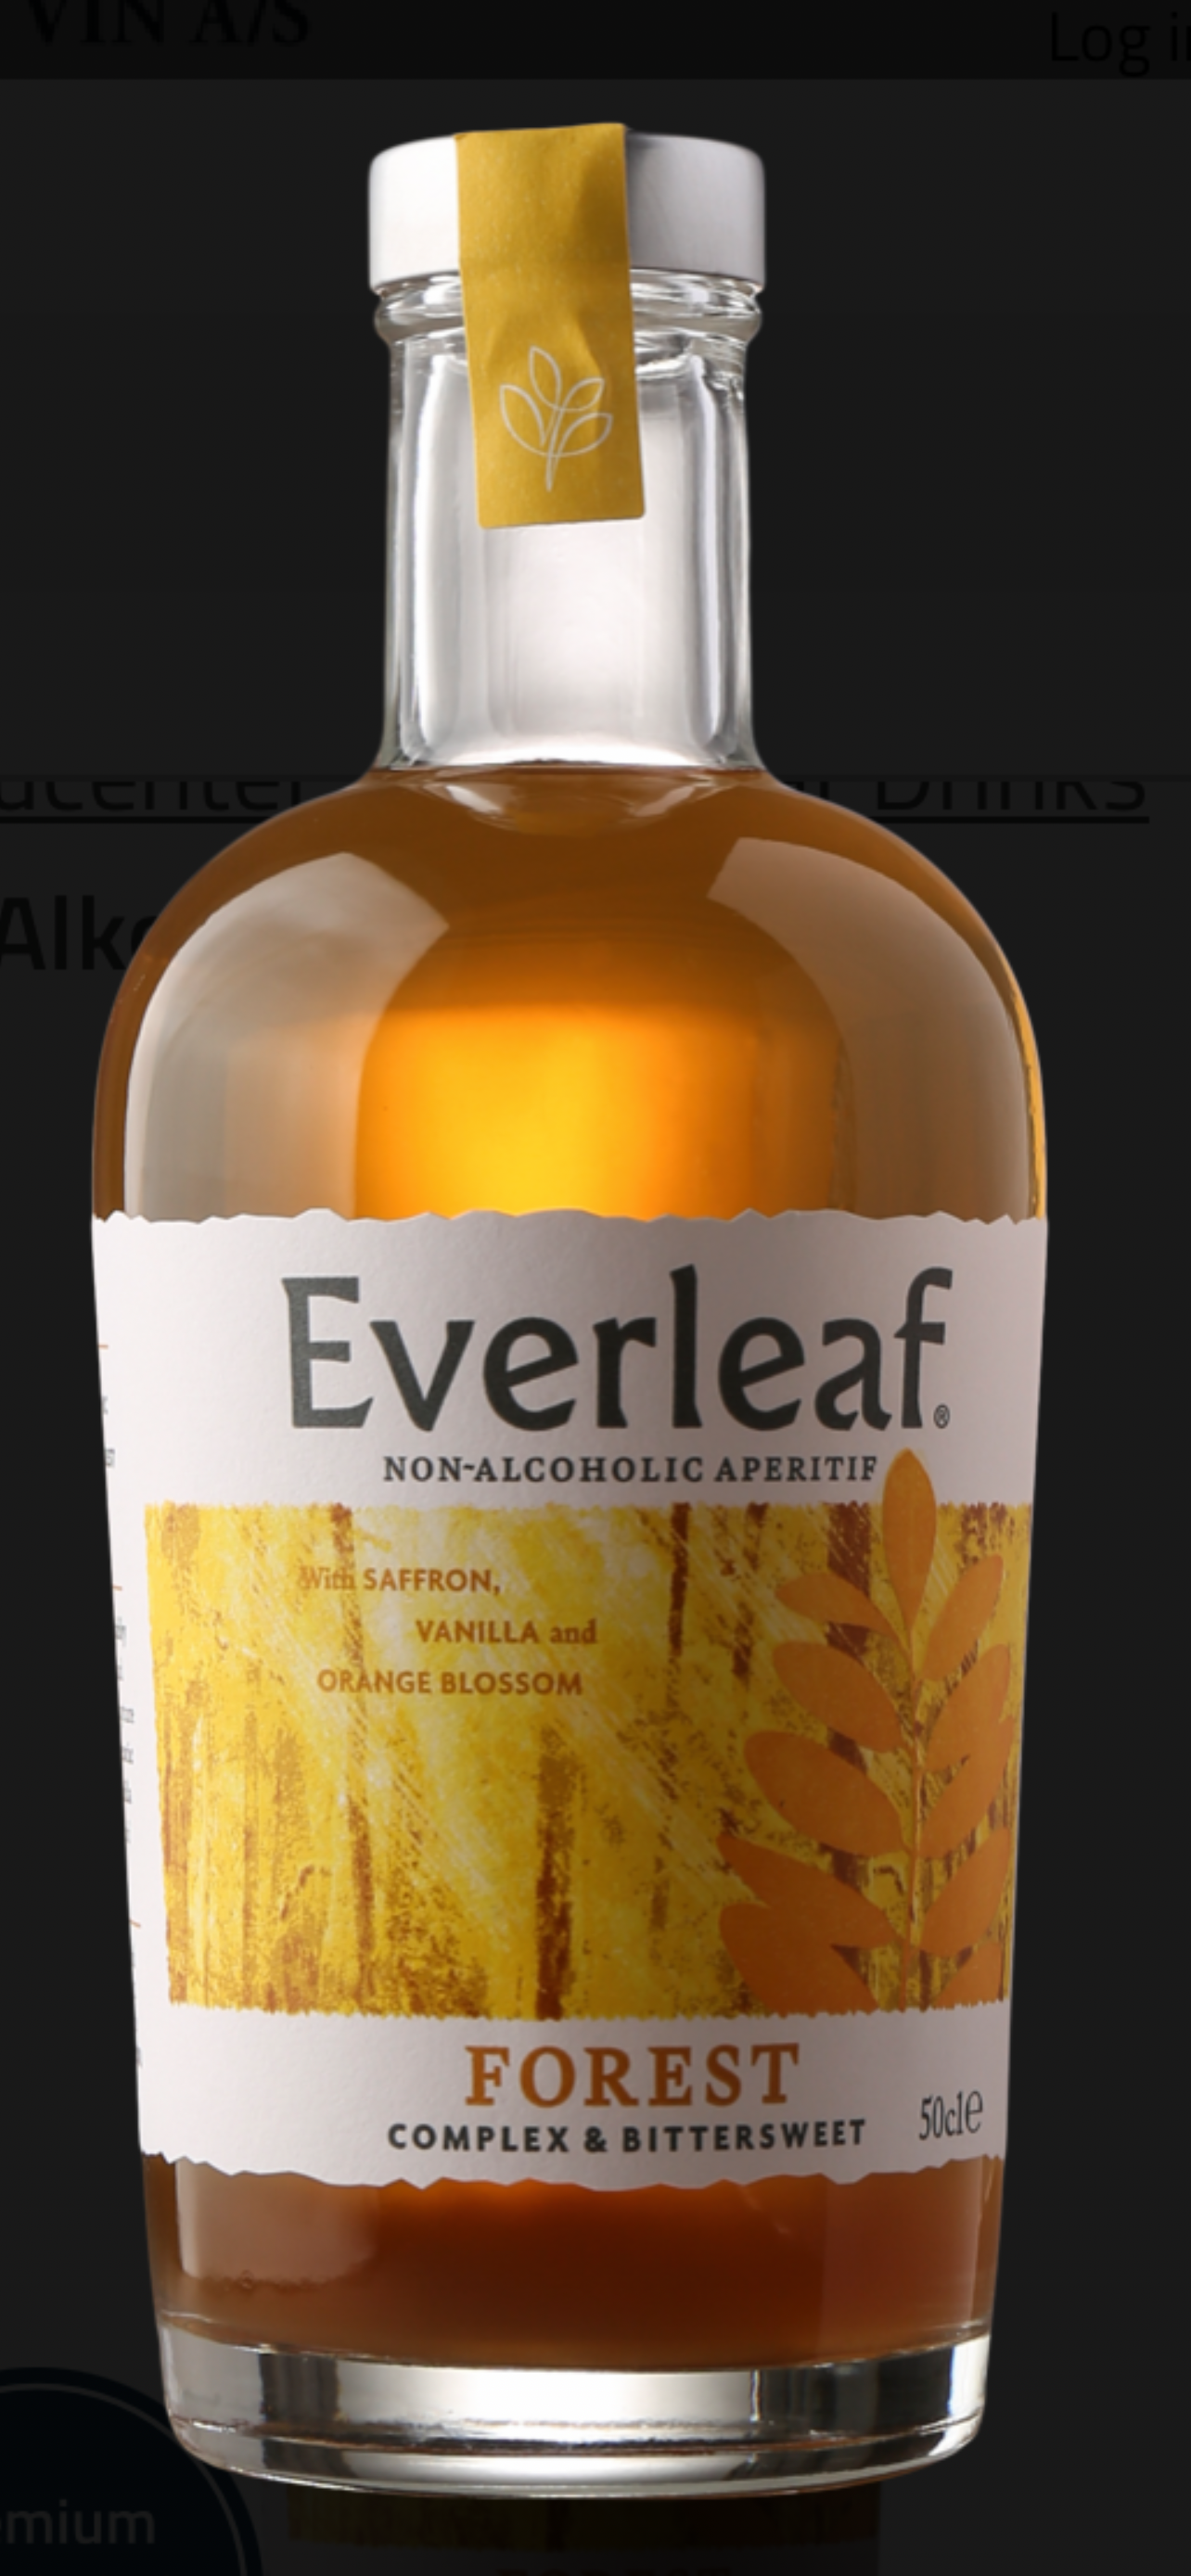 Everleaf Forest Alkoholfri, 50 cl
Everleaf Drinks